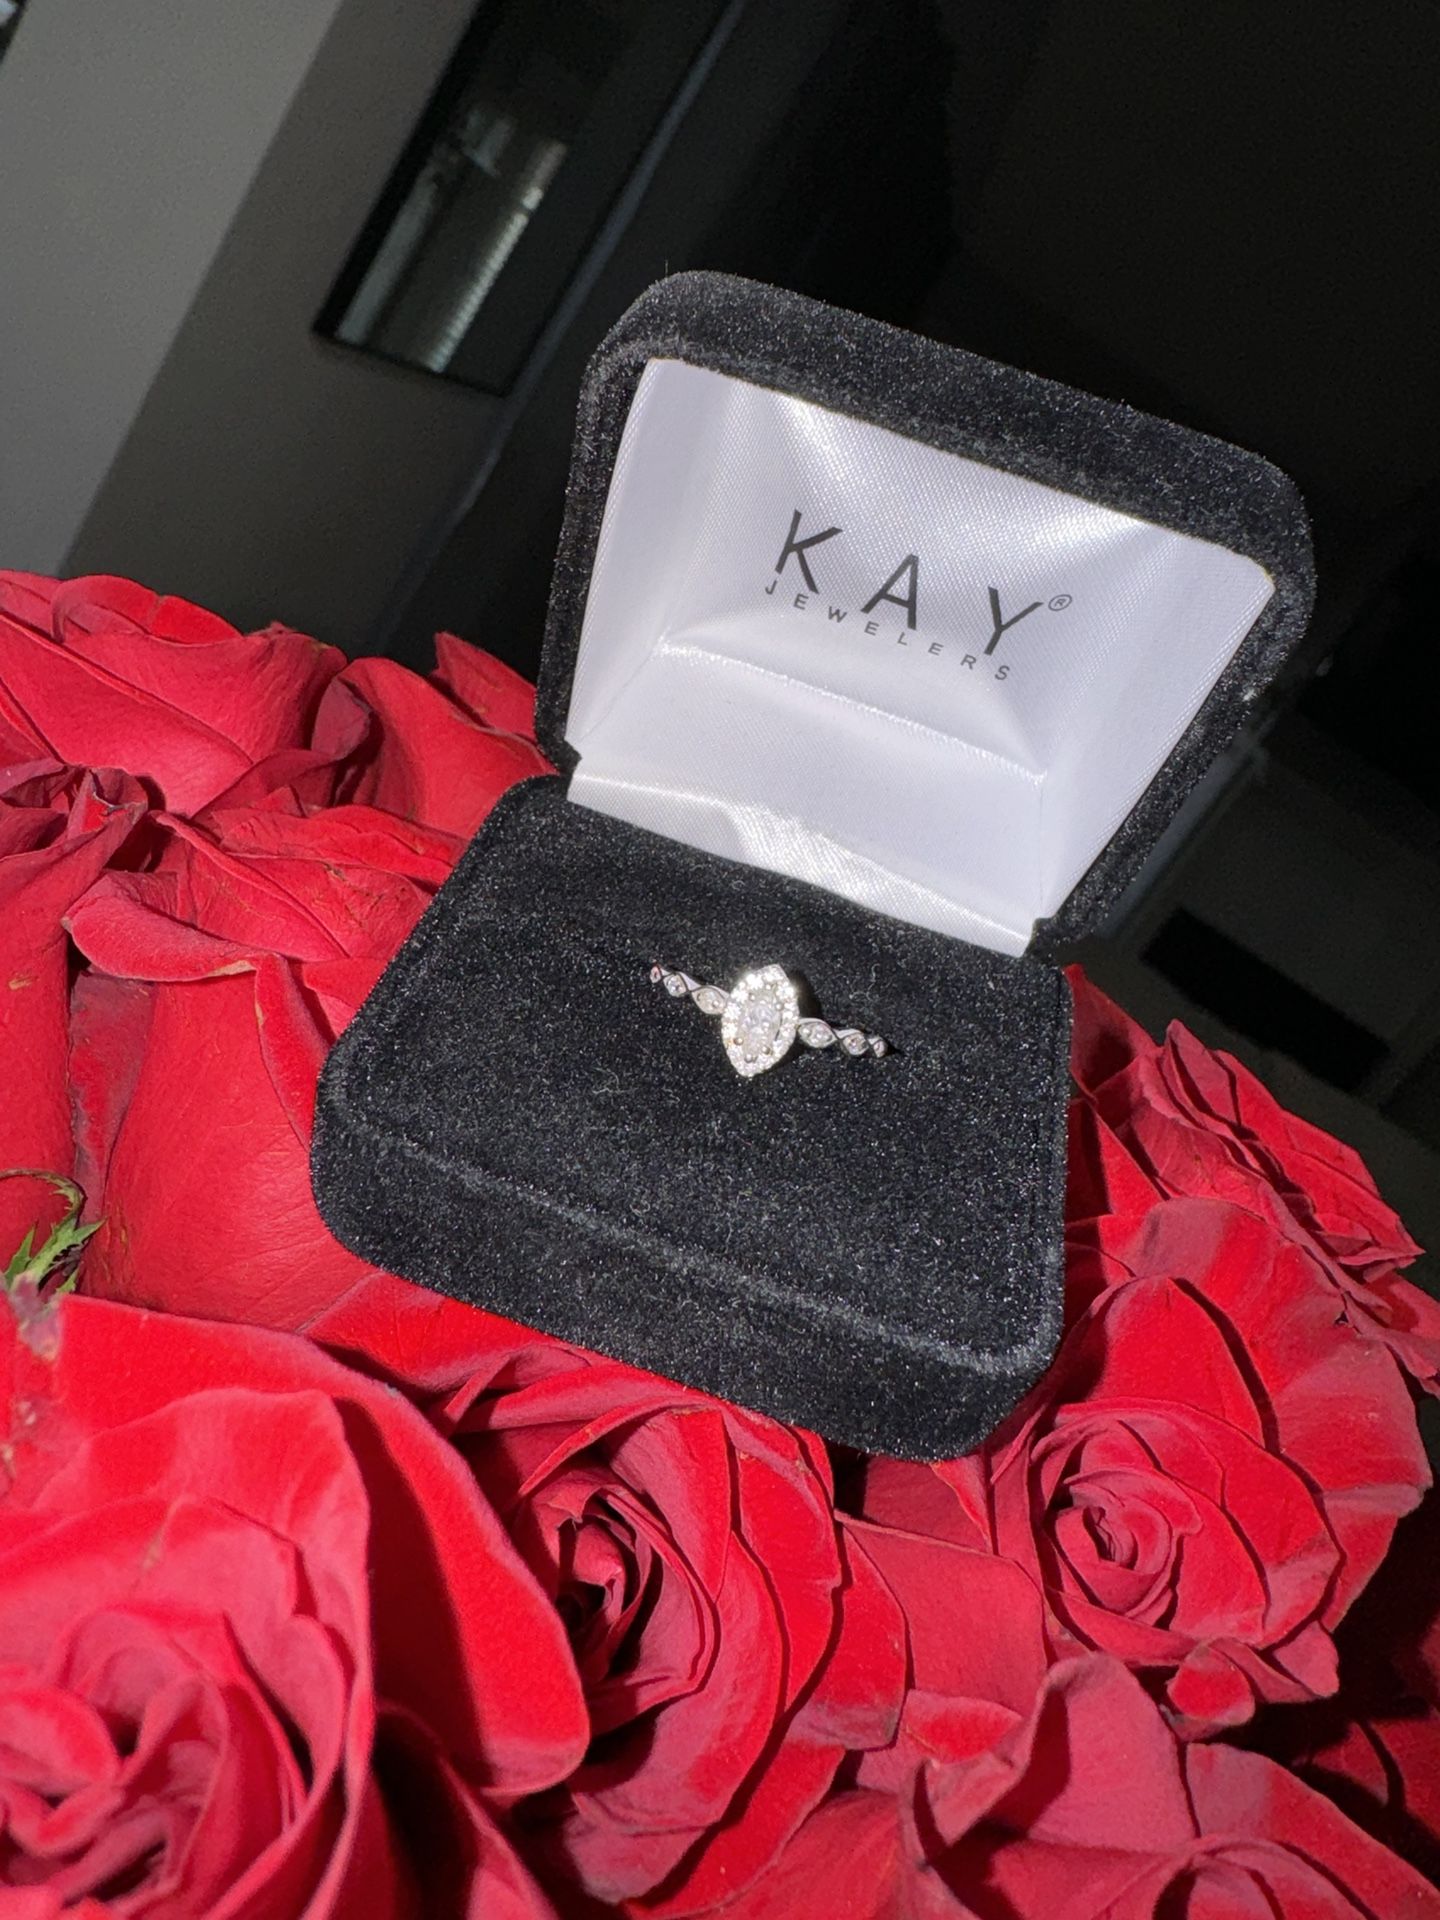 10K White Gold Kay Jewelers Ring